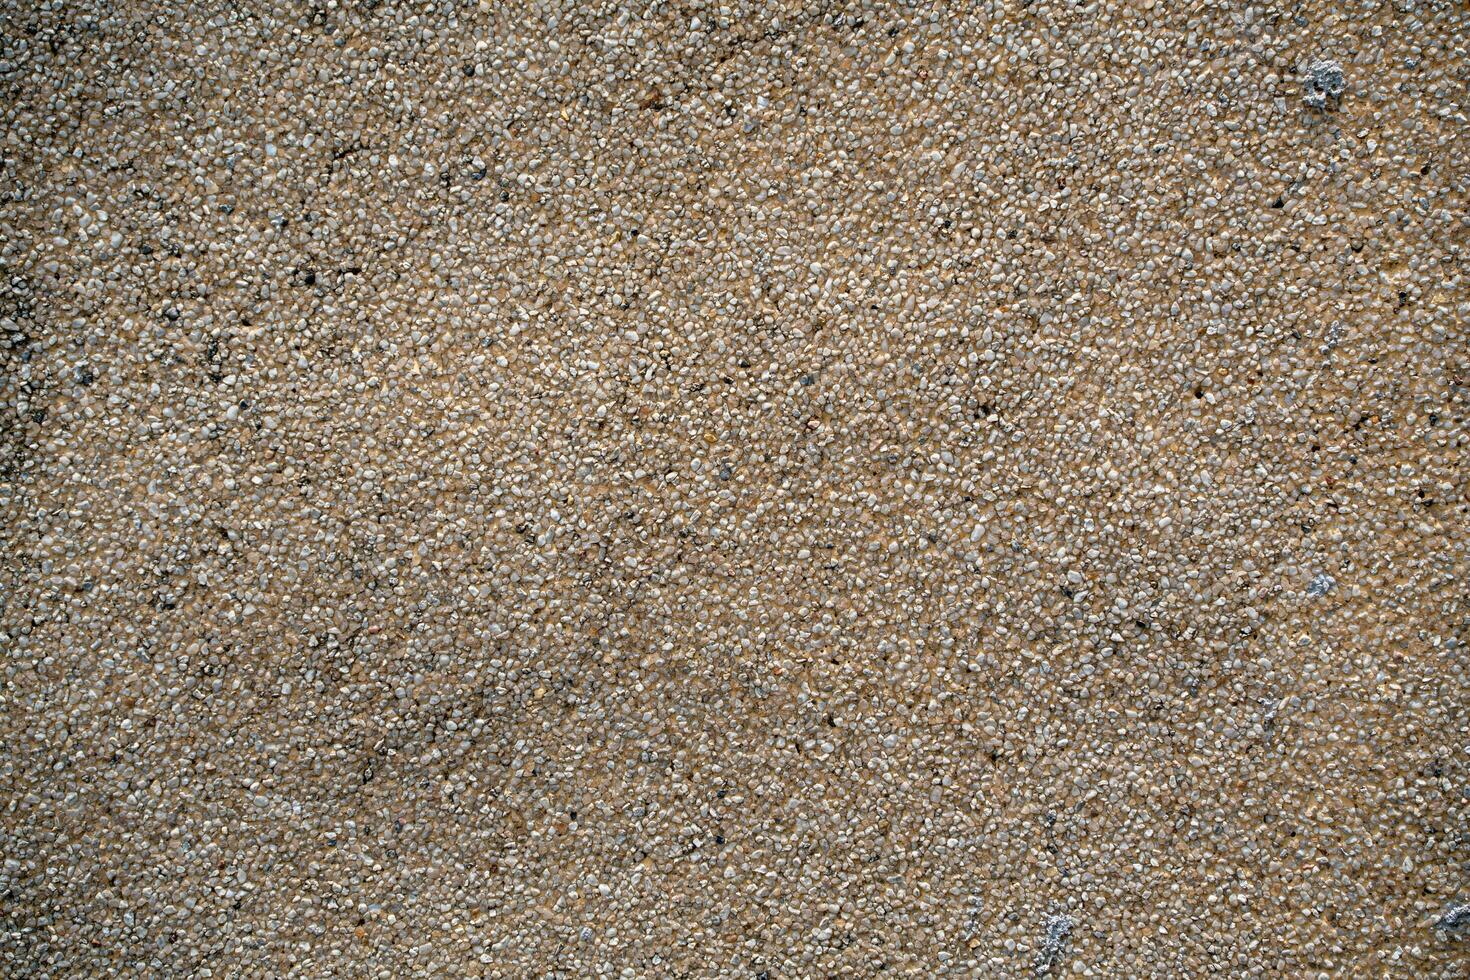 mer sable. le texture et Contexte. photo